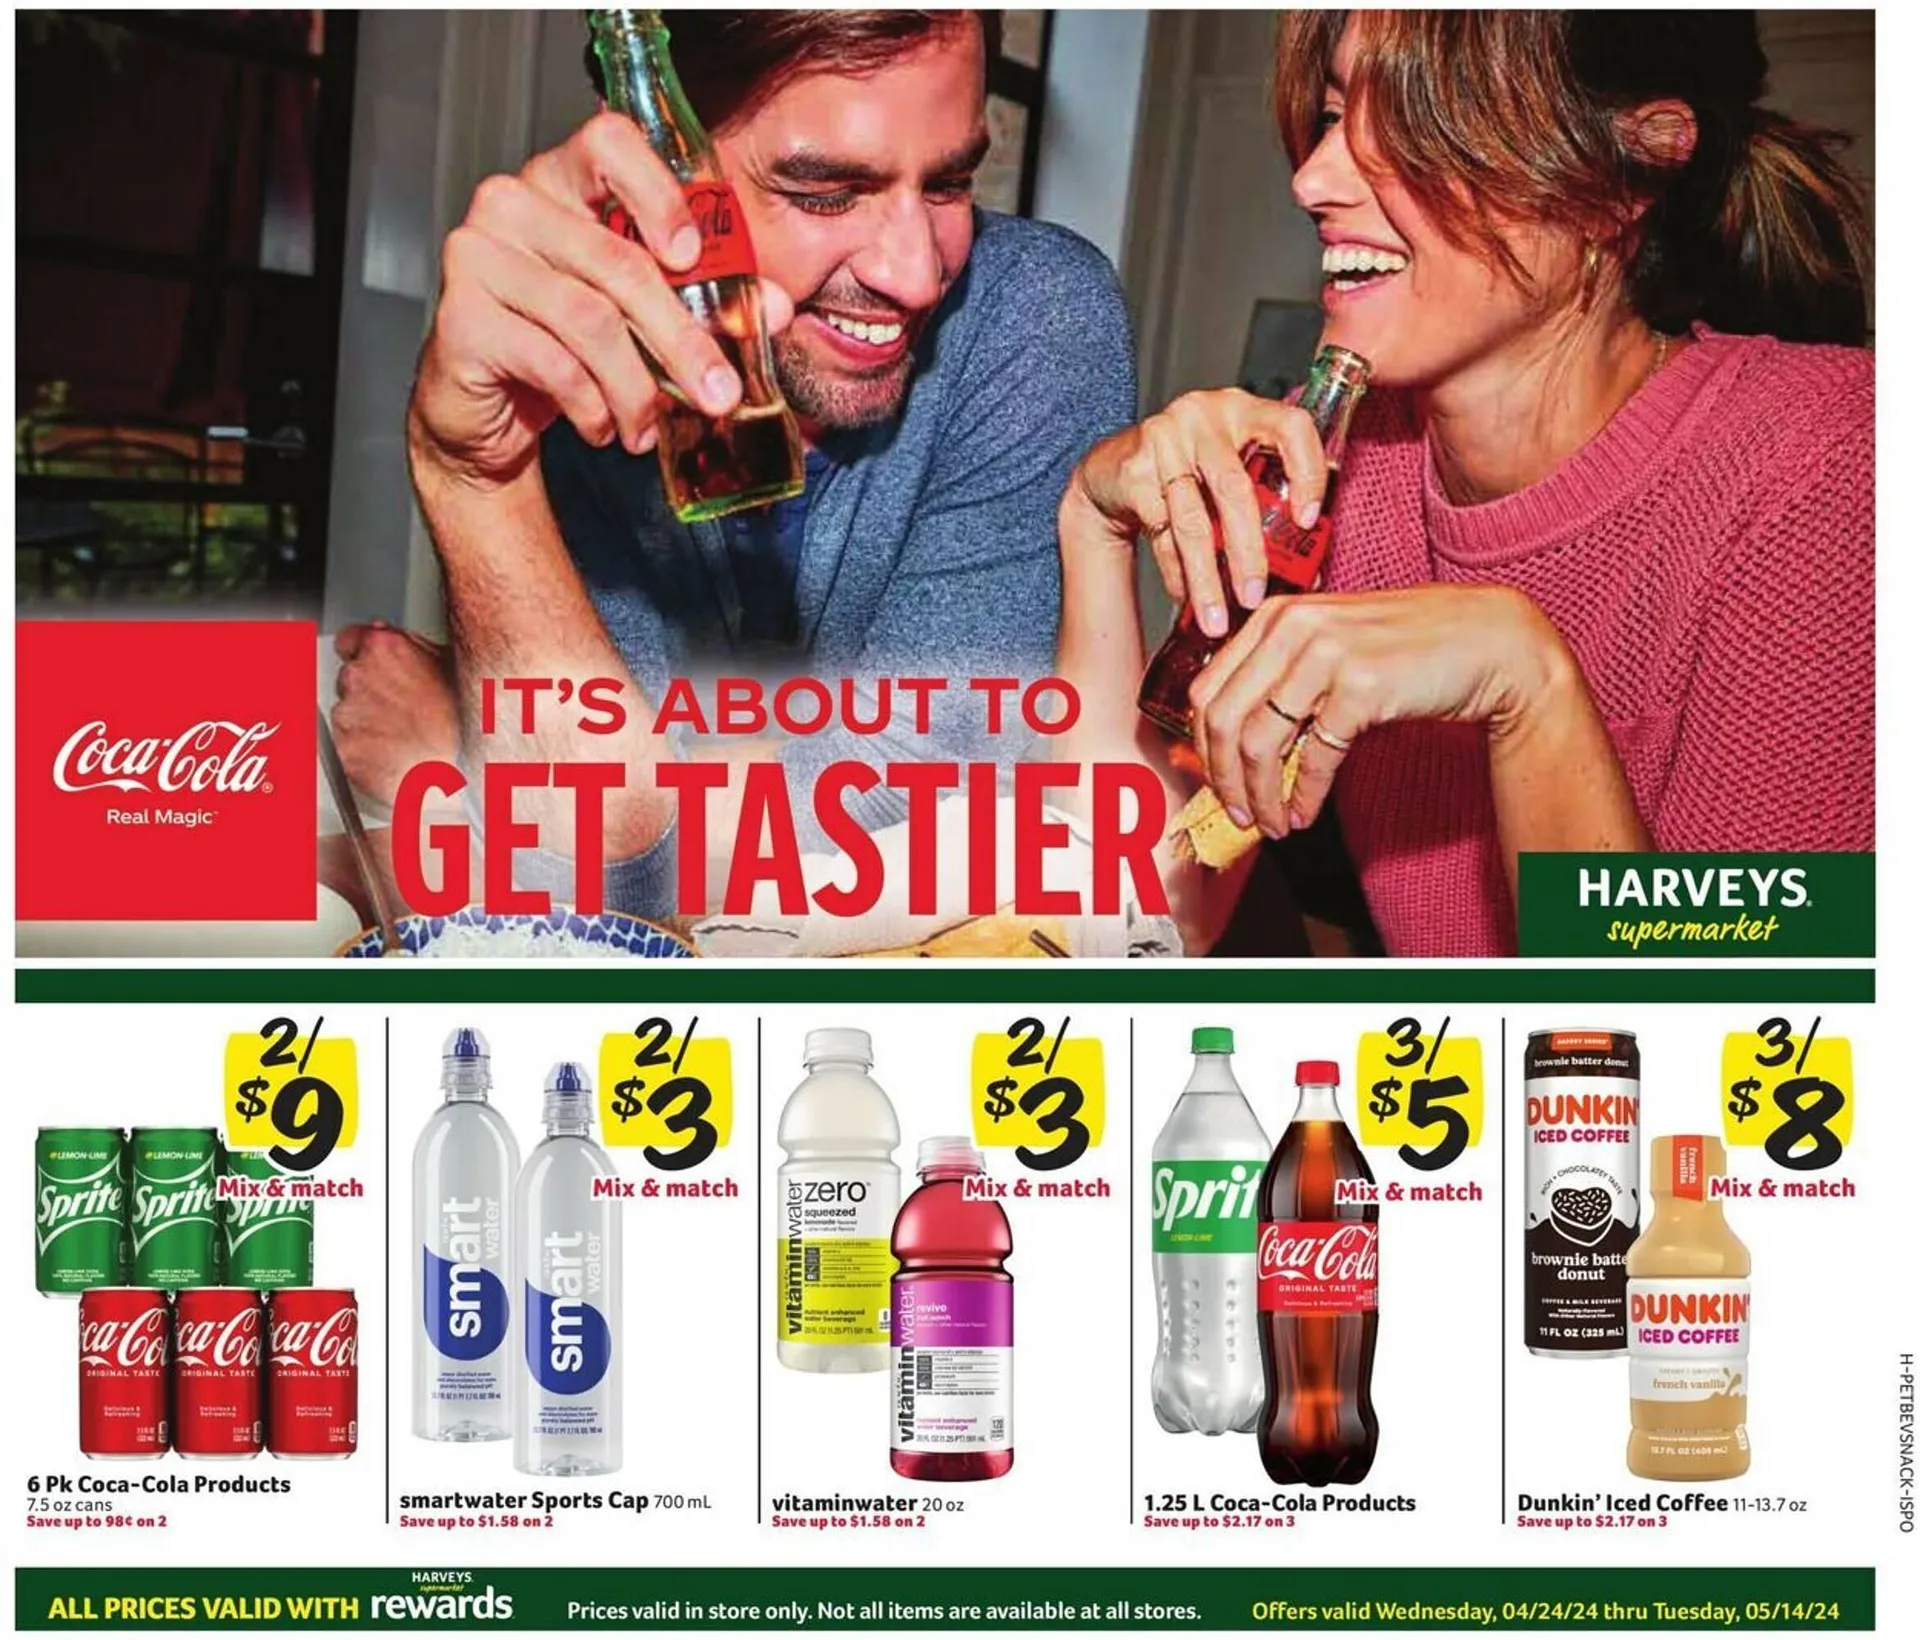 Harveys Supermarkets Weekly Ad - 6